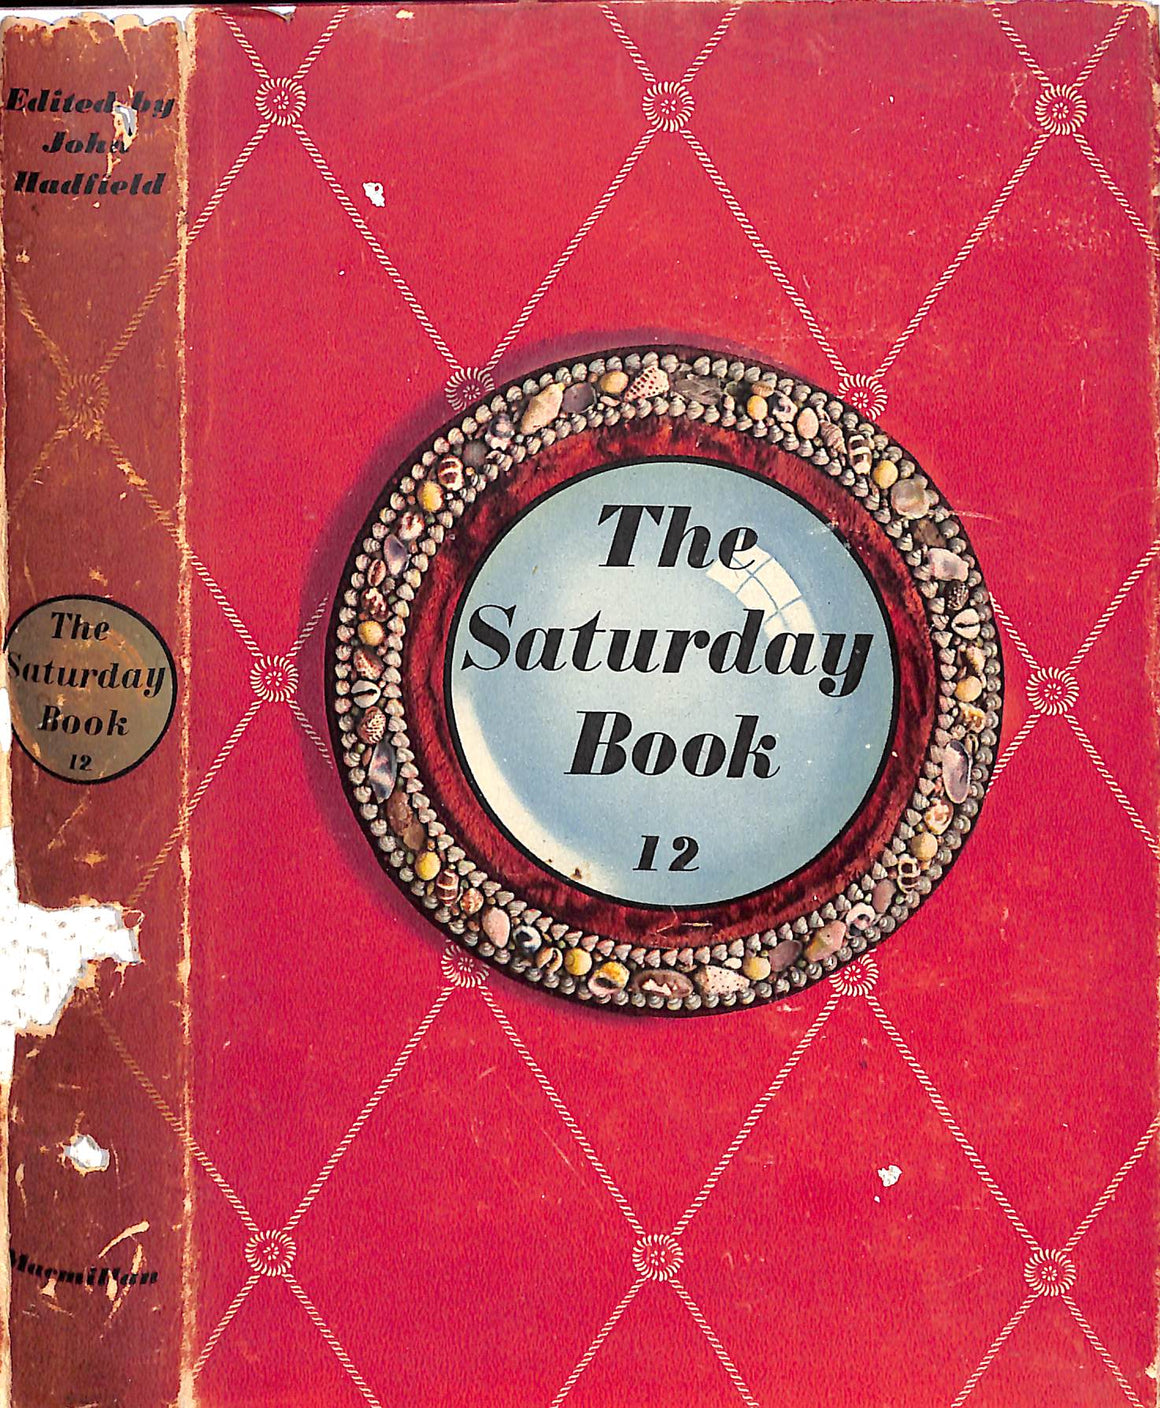 "The Saturday Book 12" 1952 HADFIELD, John